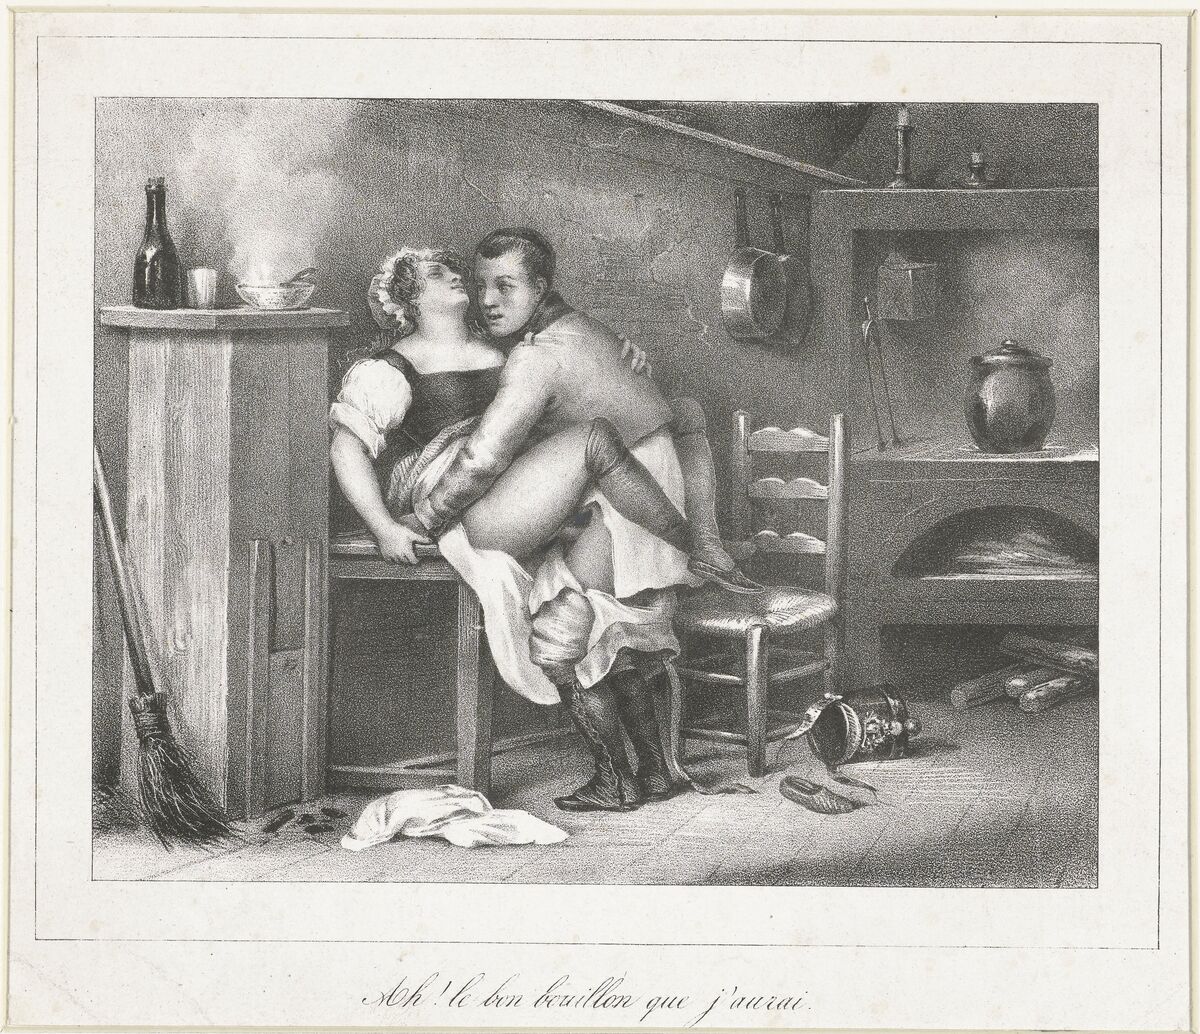 Anonymous, Soldaat vrijend met een keukenmeid (“Soldier making love with a kitchen maid”) ca. 1800–1900. Courtesy of the Rijksmuseum.